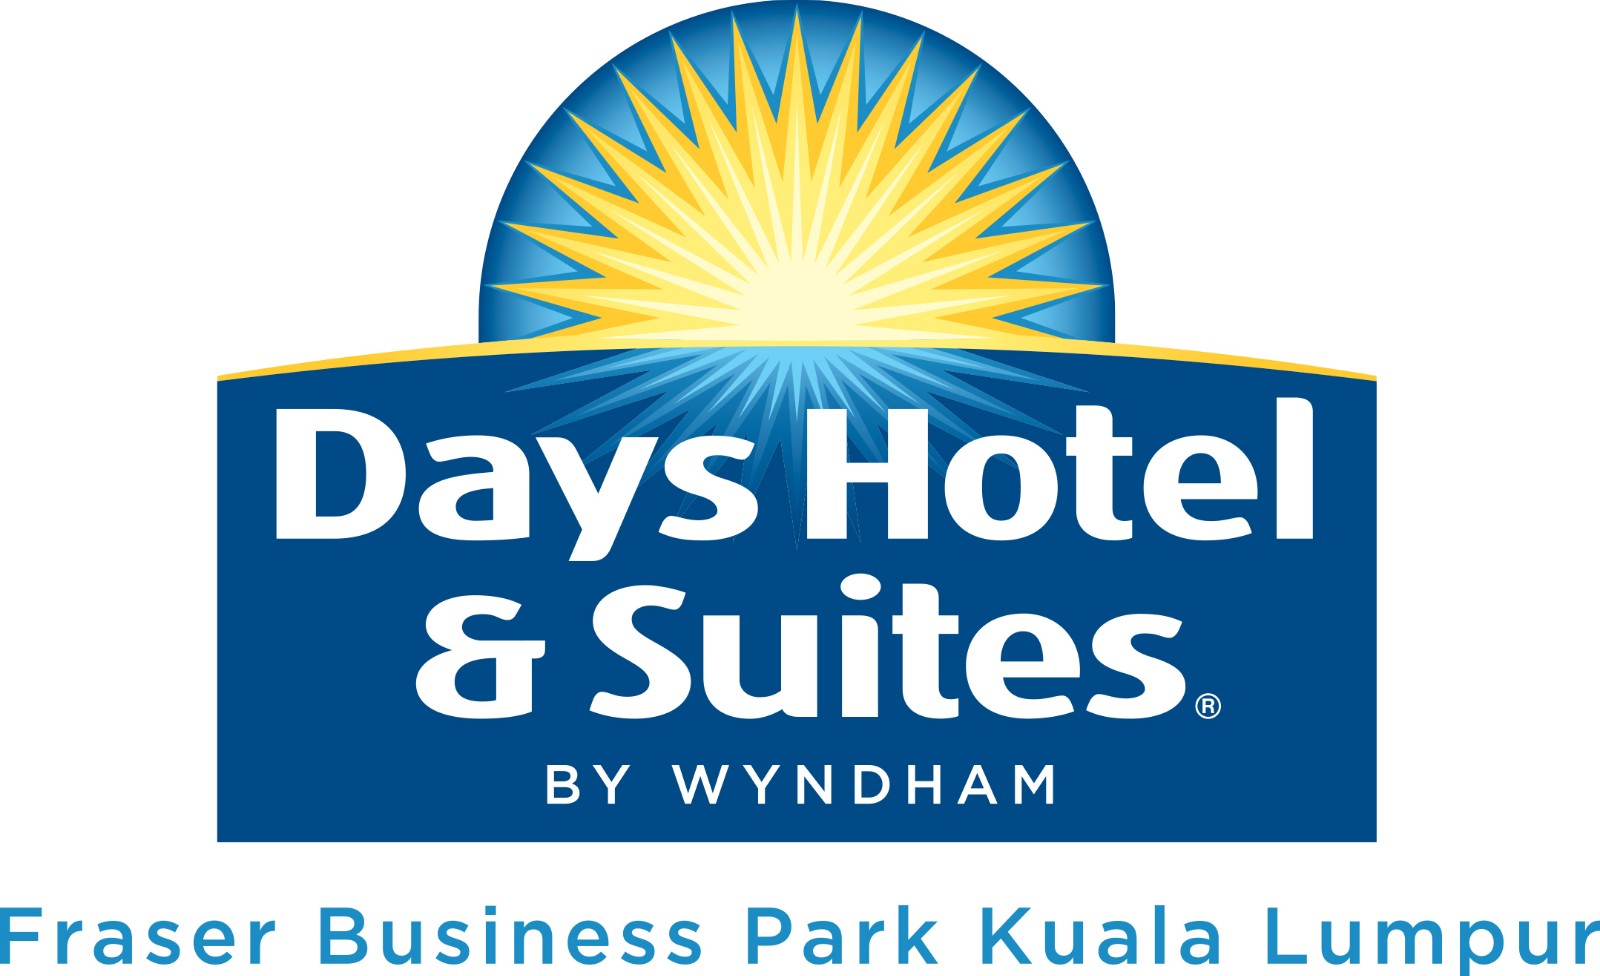 Days Hotel & Suites Fraser Business Park Kuala Lumpur